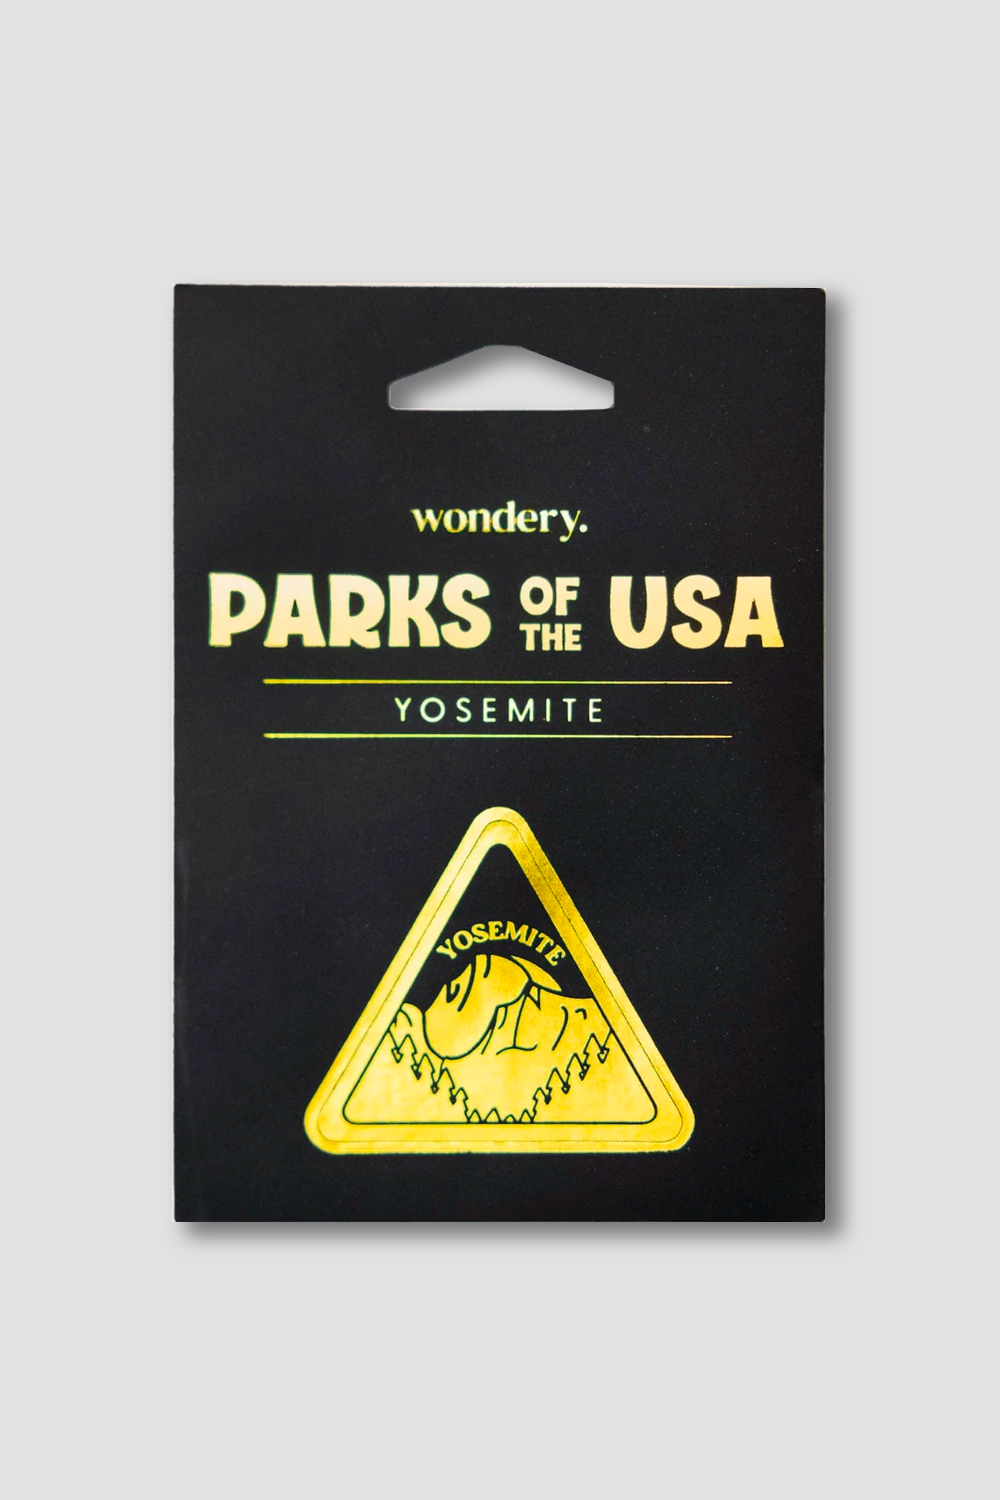 #national park_yosemite _USA National Park souvenir stickers